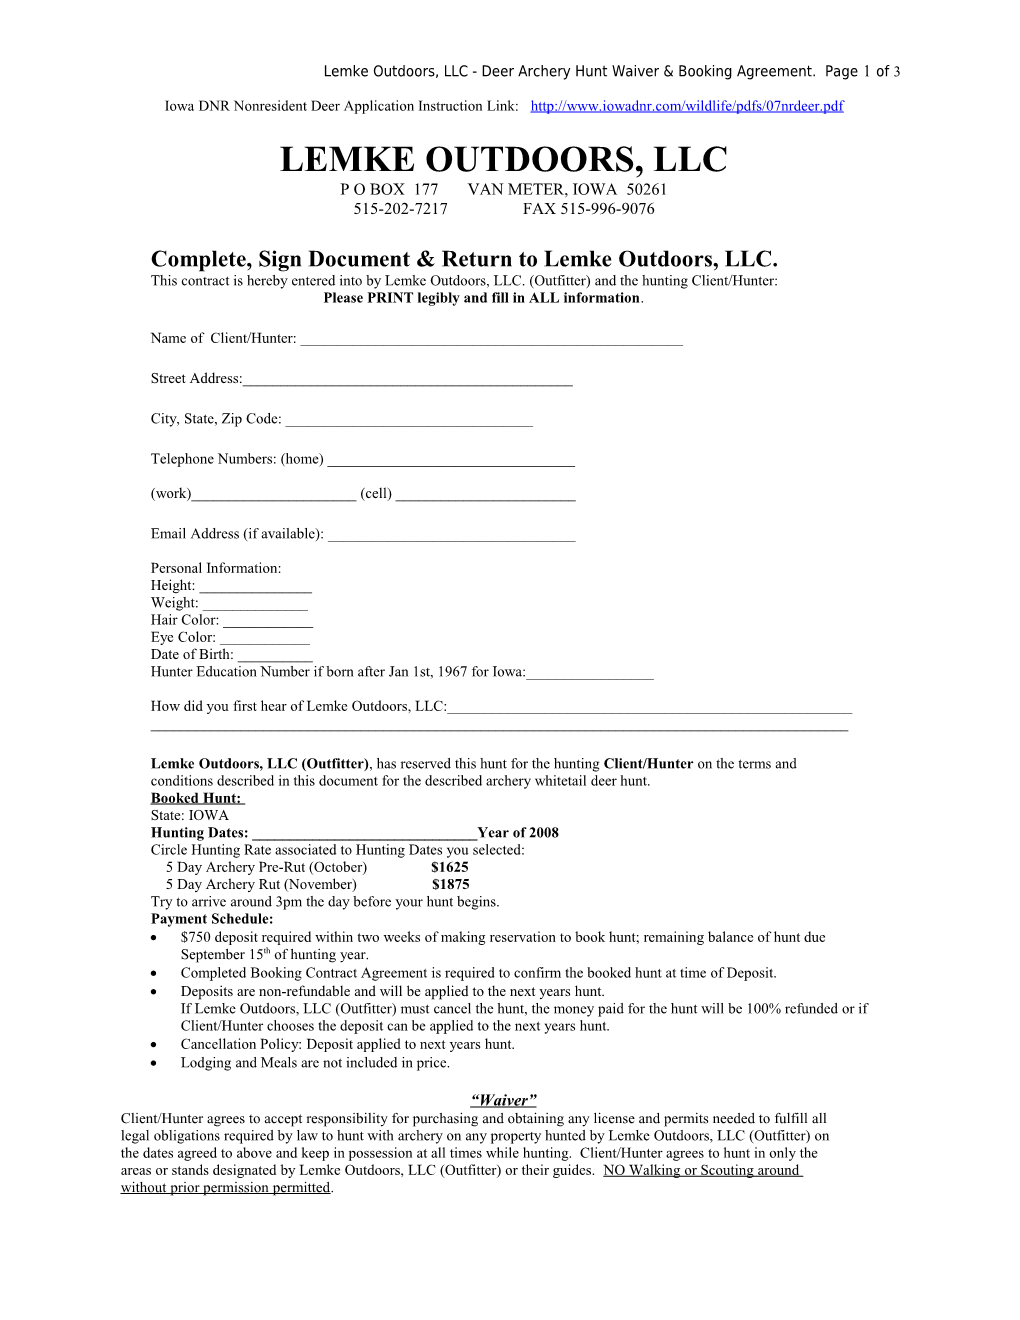 Sign Document & Return to Lemke Outdoors, LLC